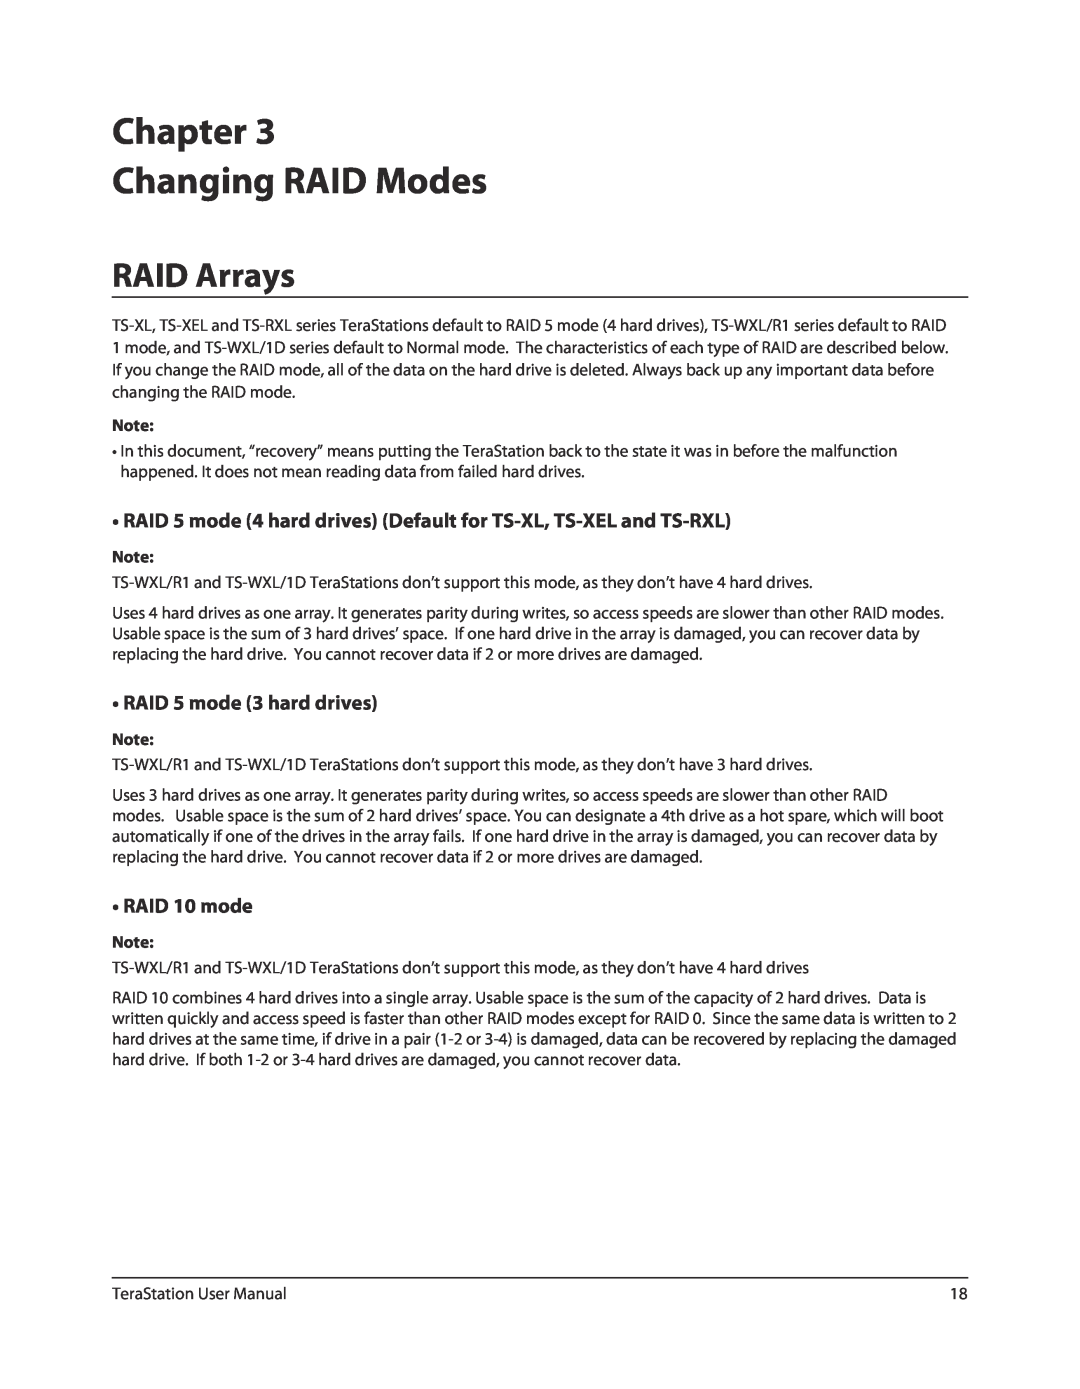 Buffalo Technology TS-RXL, TSXE80TLR5 Chapter Changing RAID Modes, RAID Arrays, RAID 5 mode 3 hard drives, RAID 10 mode 